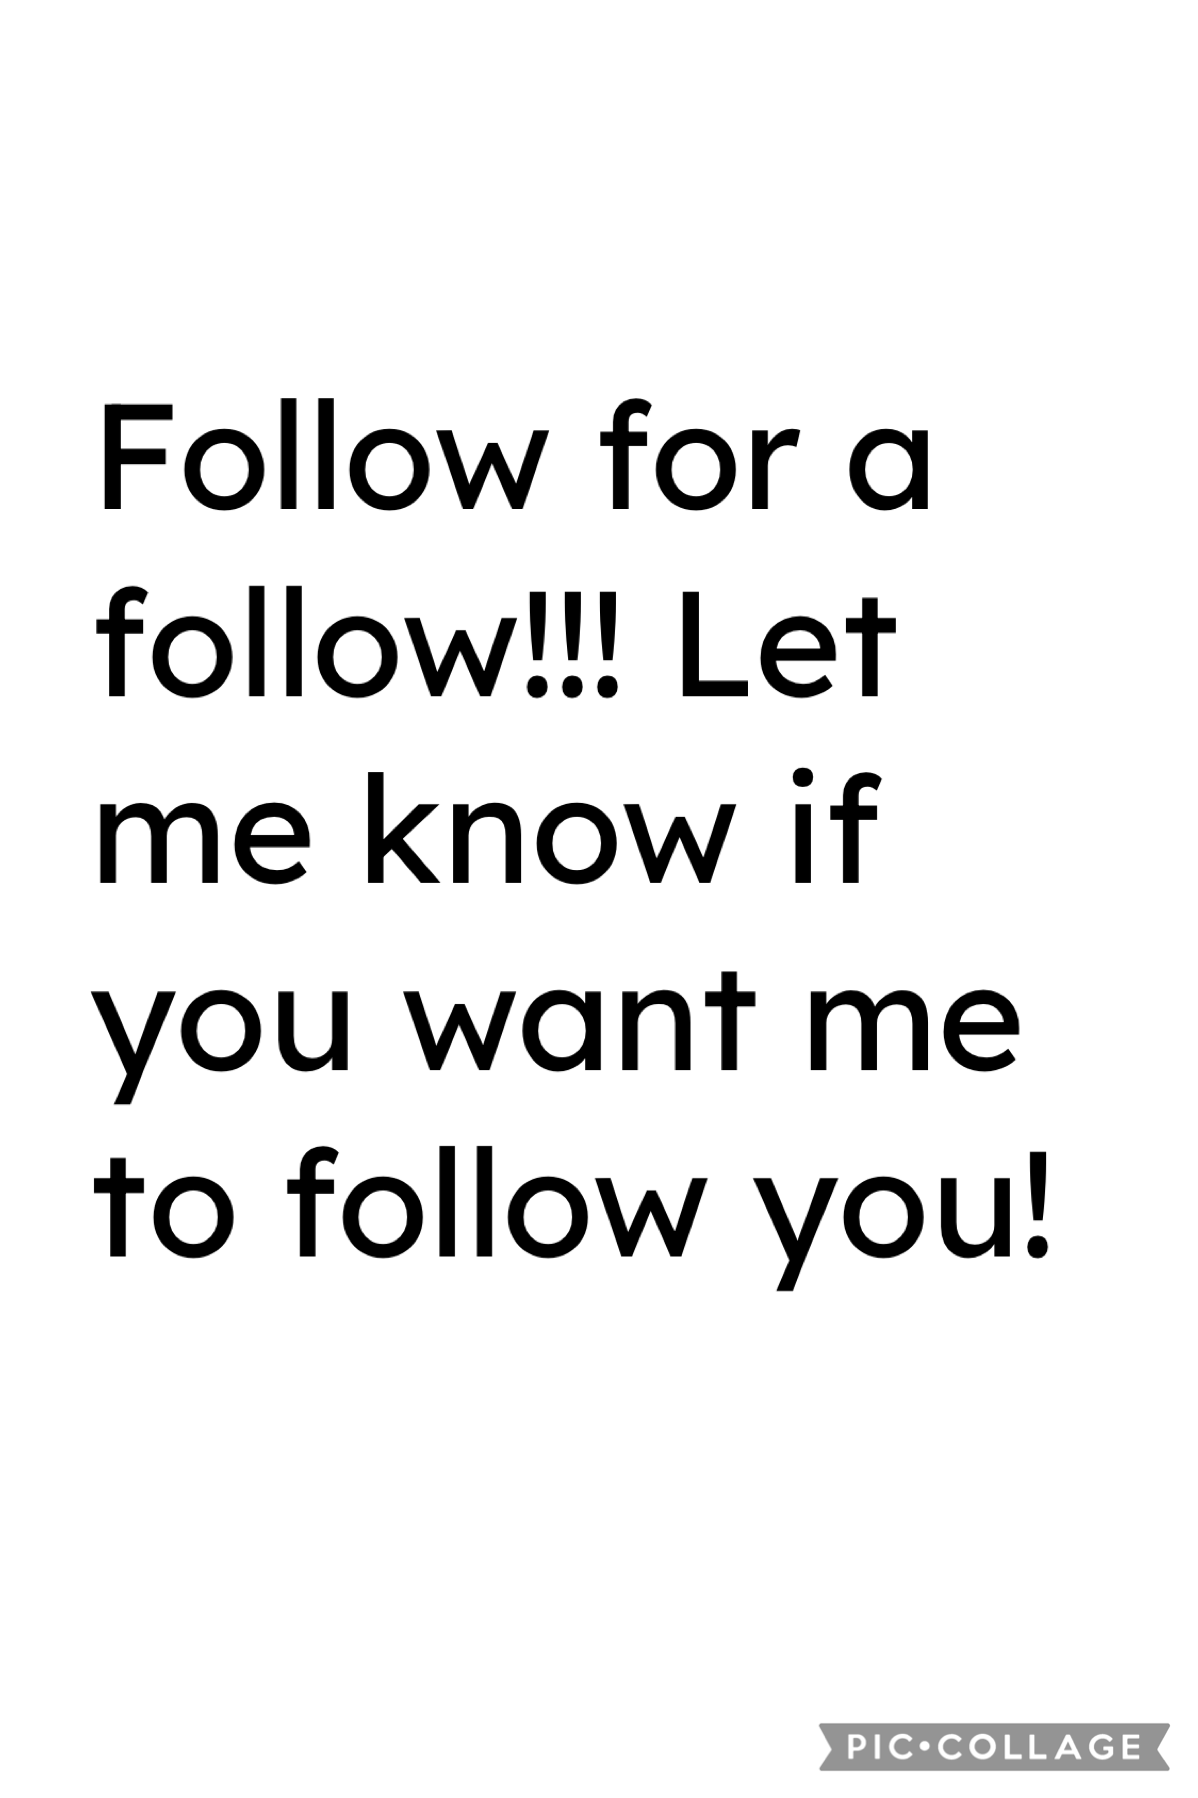 Follow for a follow!